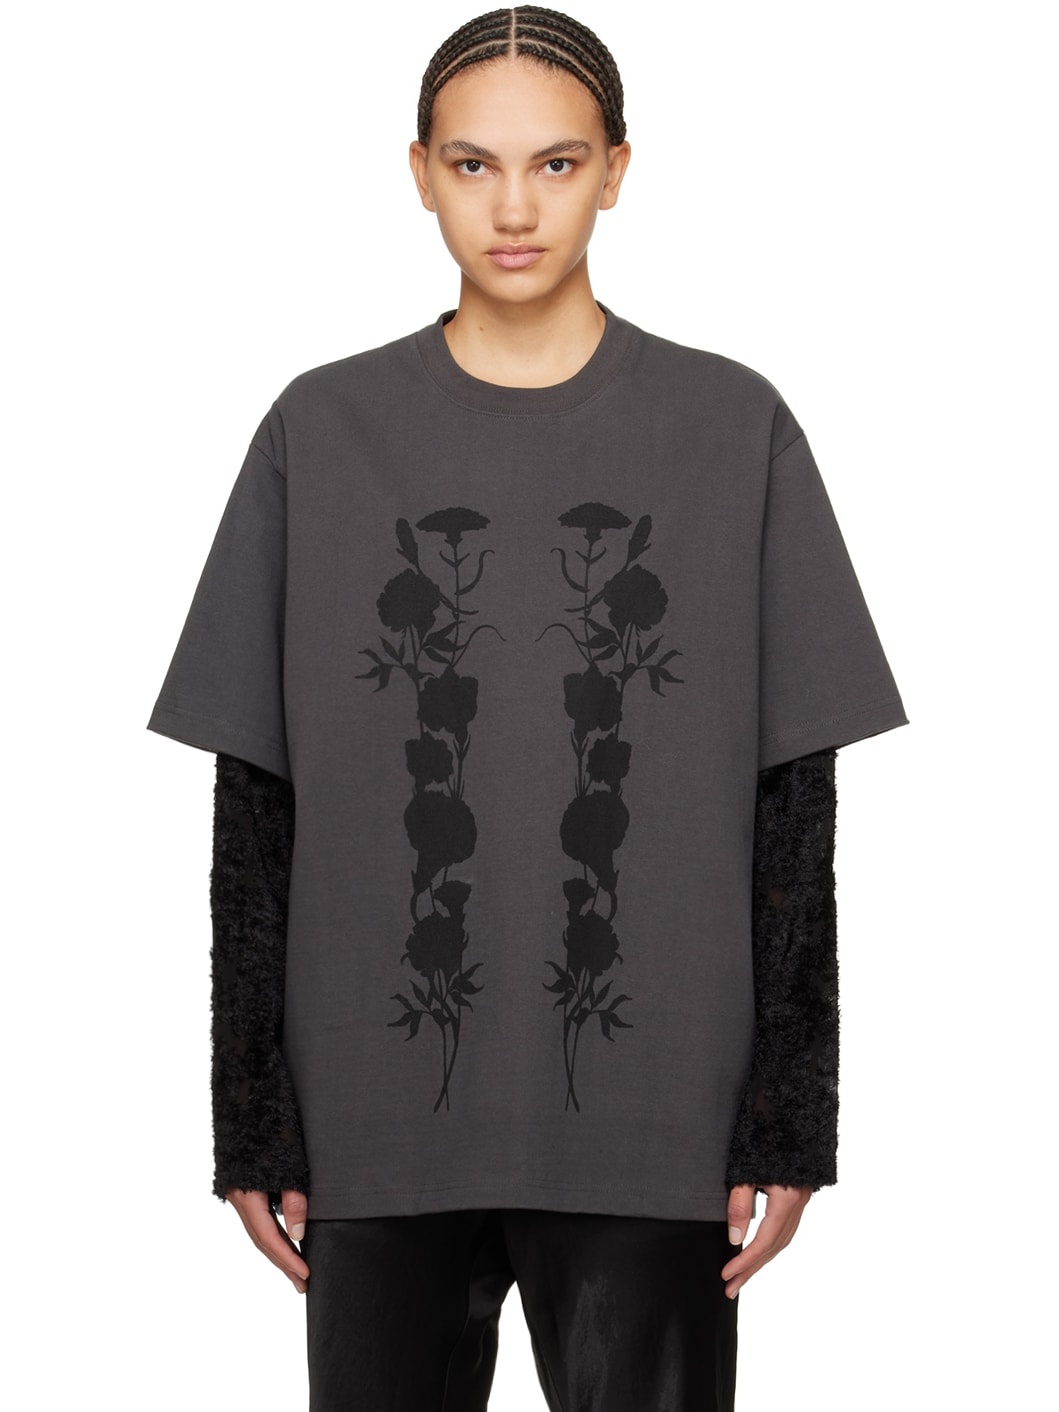 Gray 'Black Foliage' Long Sleeve T-Shirt - 1